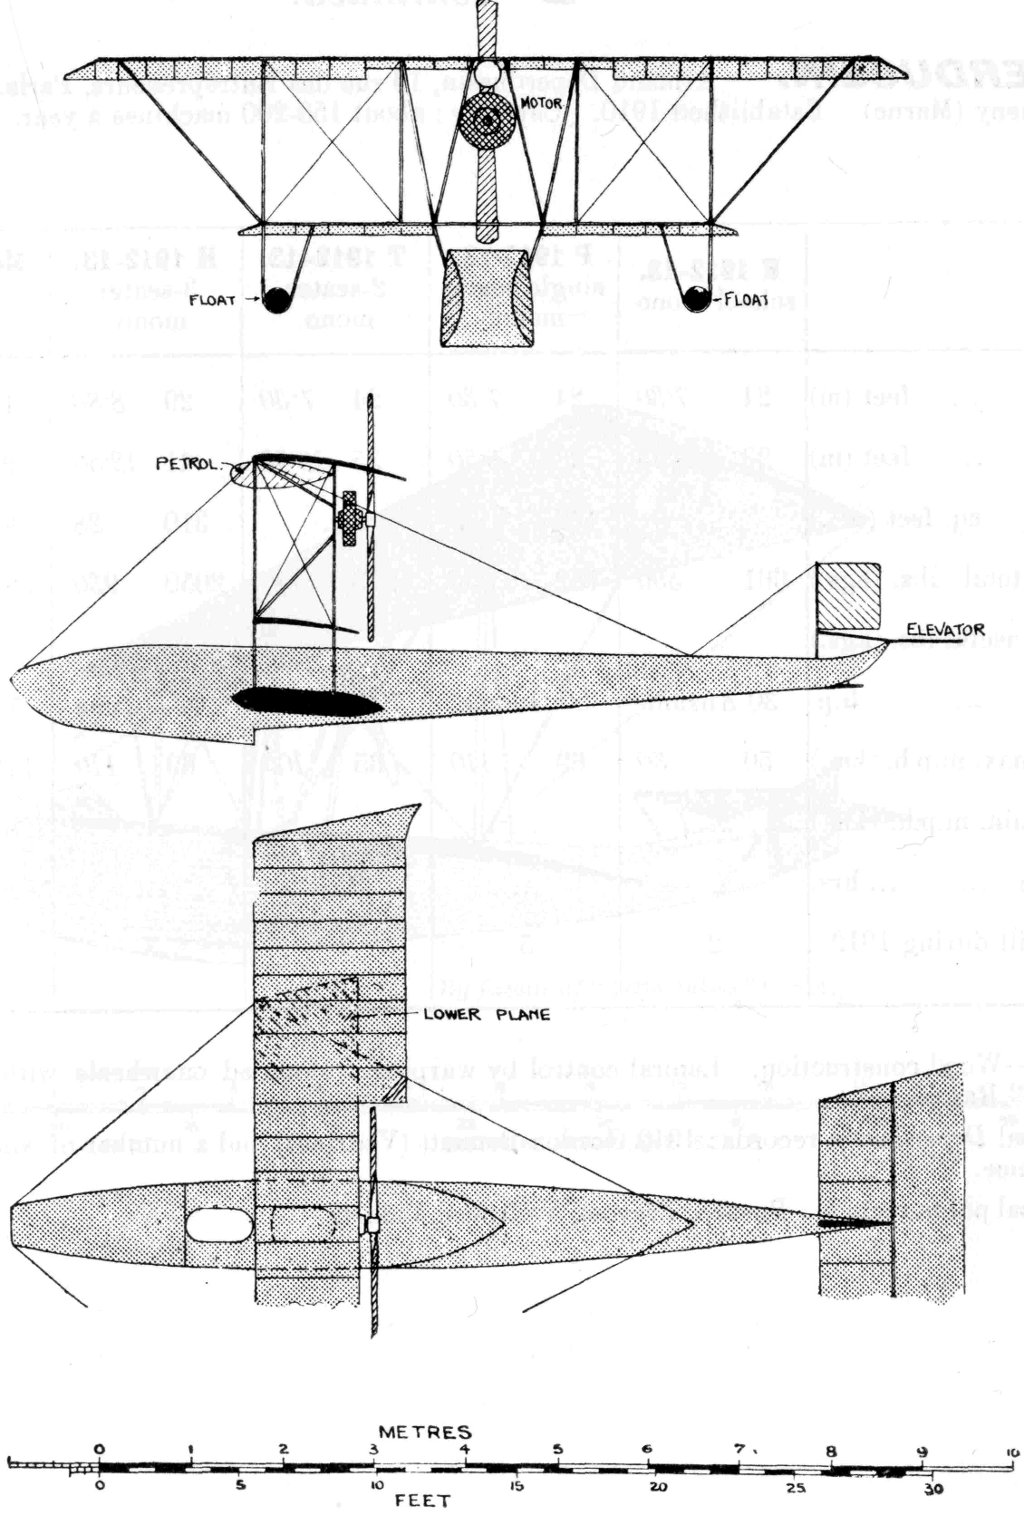 Uniform Aeroplane Scale